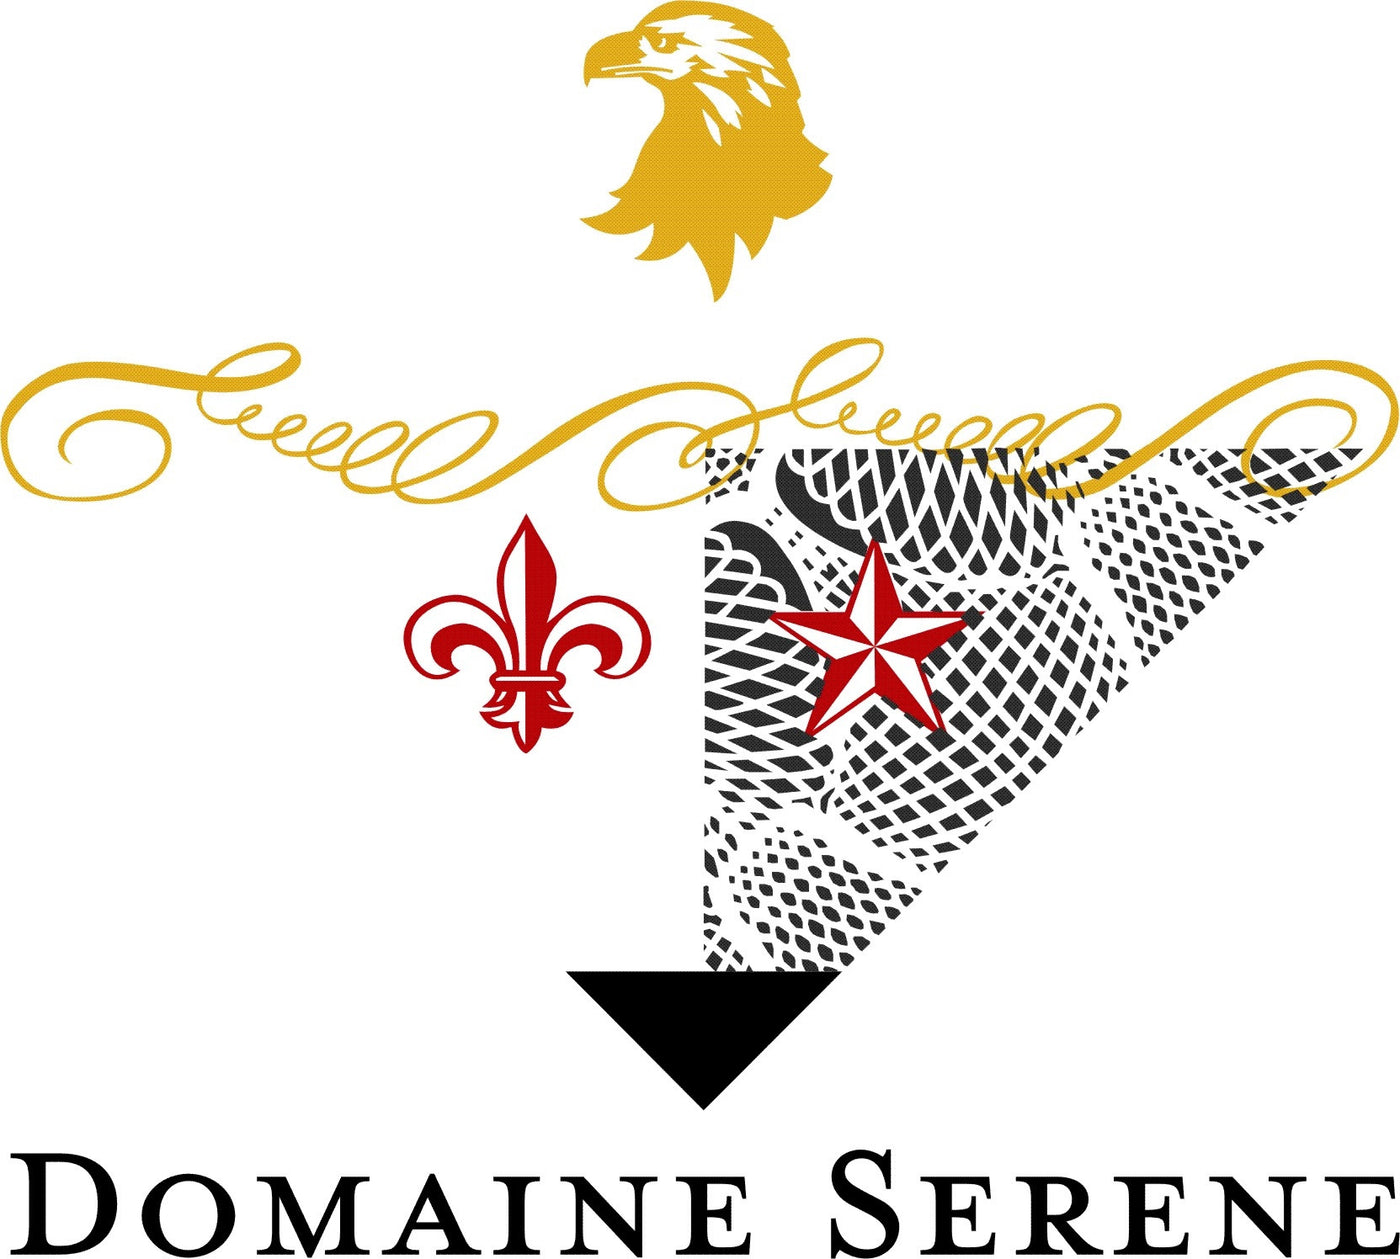 Domaine Serene Yamhill Cuvee Pinot noir 2019